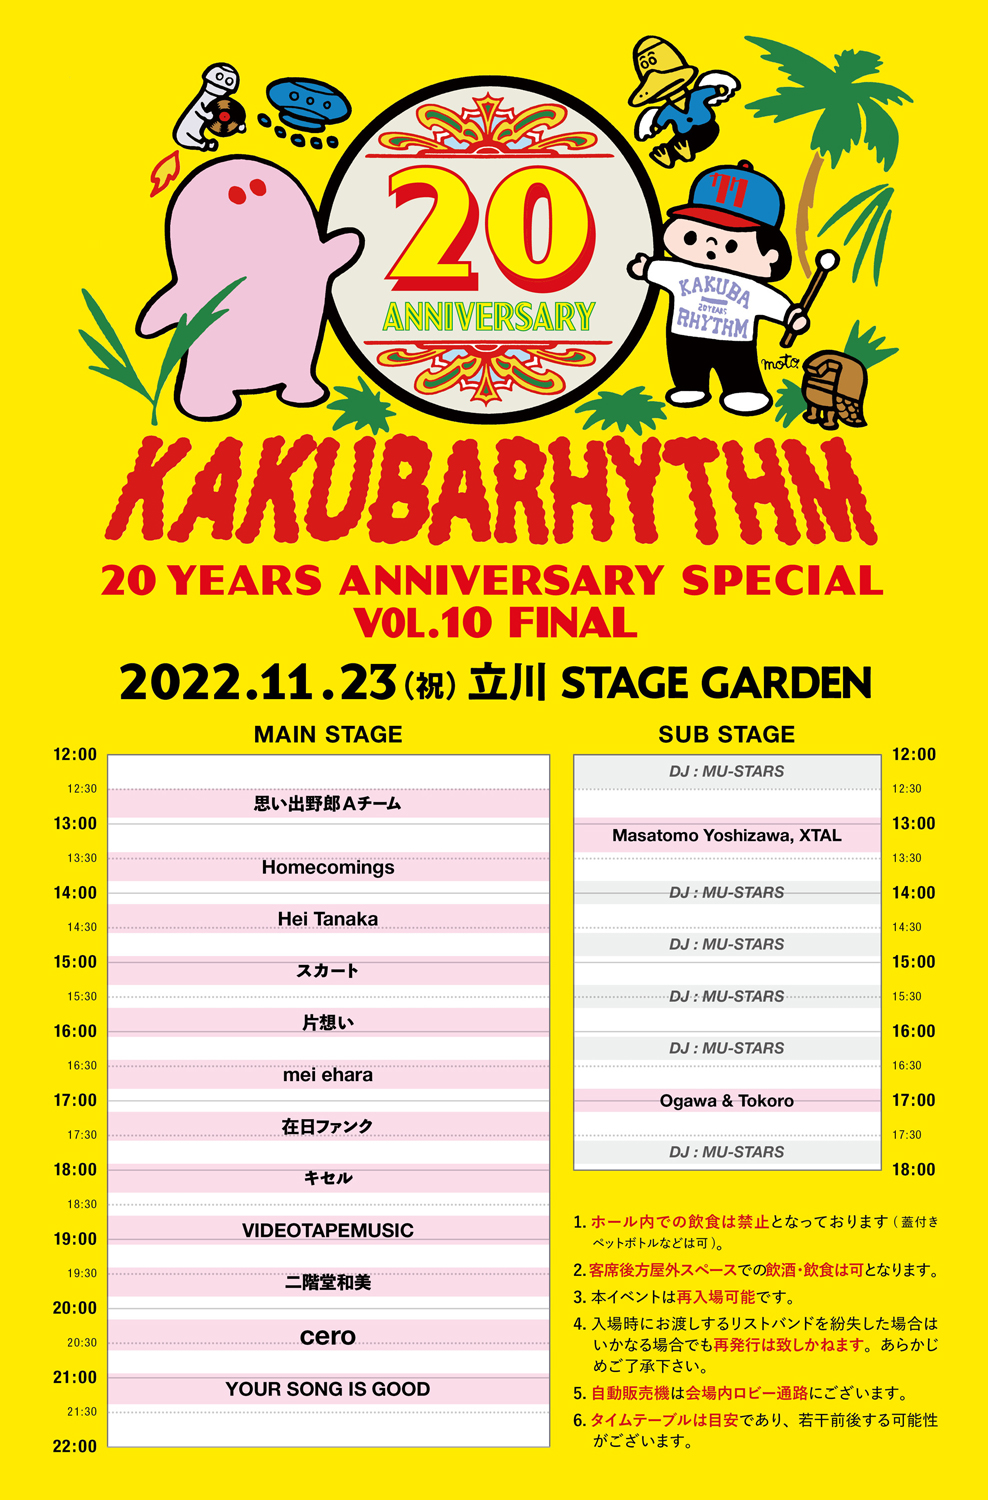 「KAKUBARHYTHM 20years Anniversary Special Vol.10 Final」